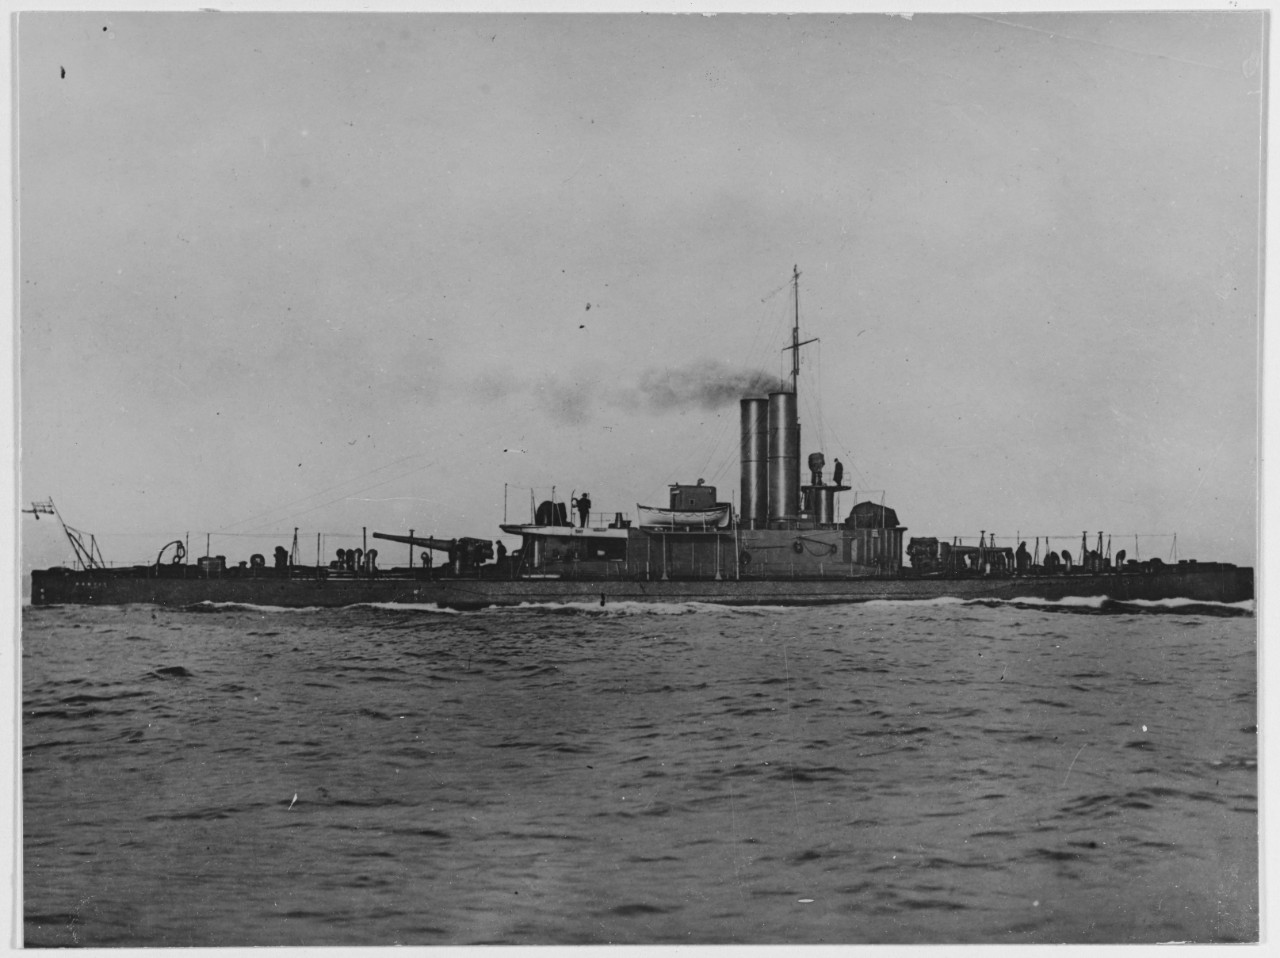 MANTIS (British river gunboat, 1915)